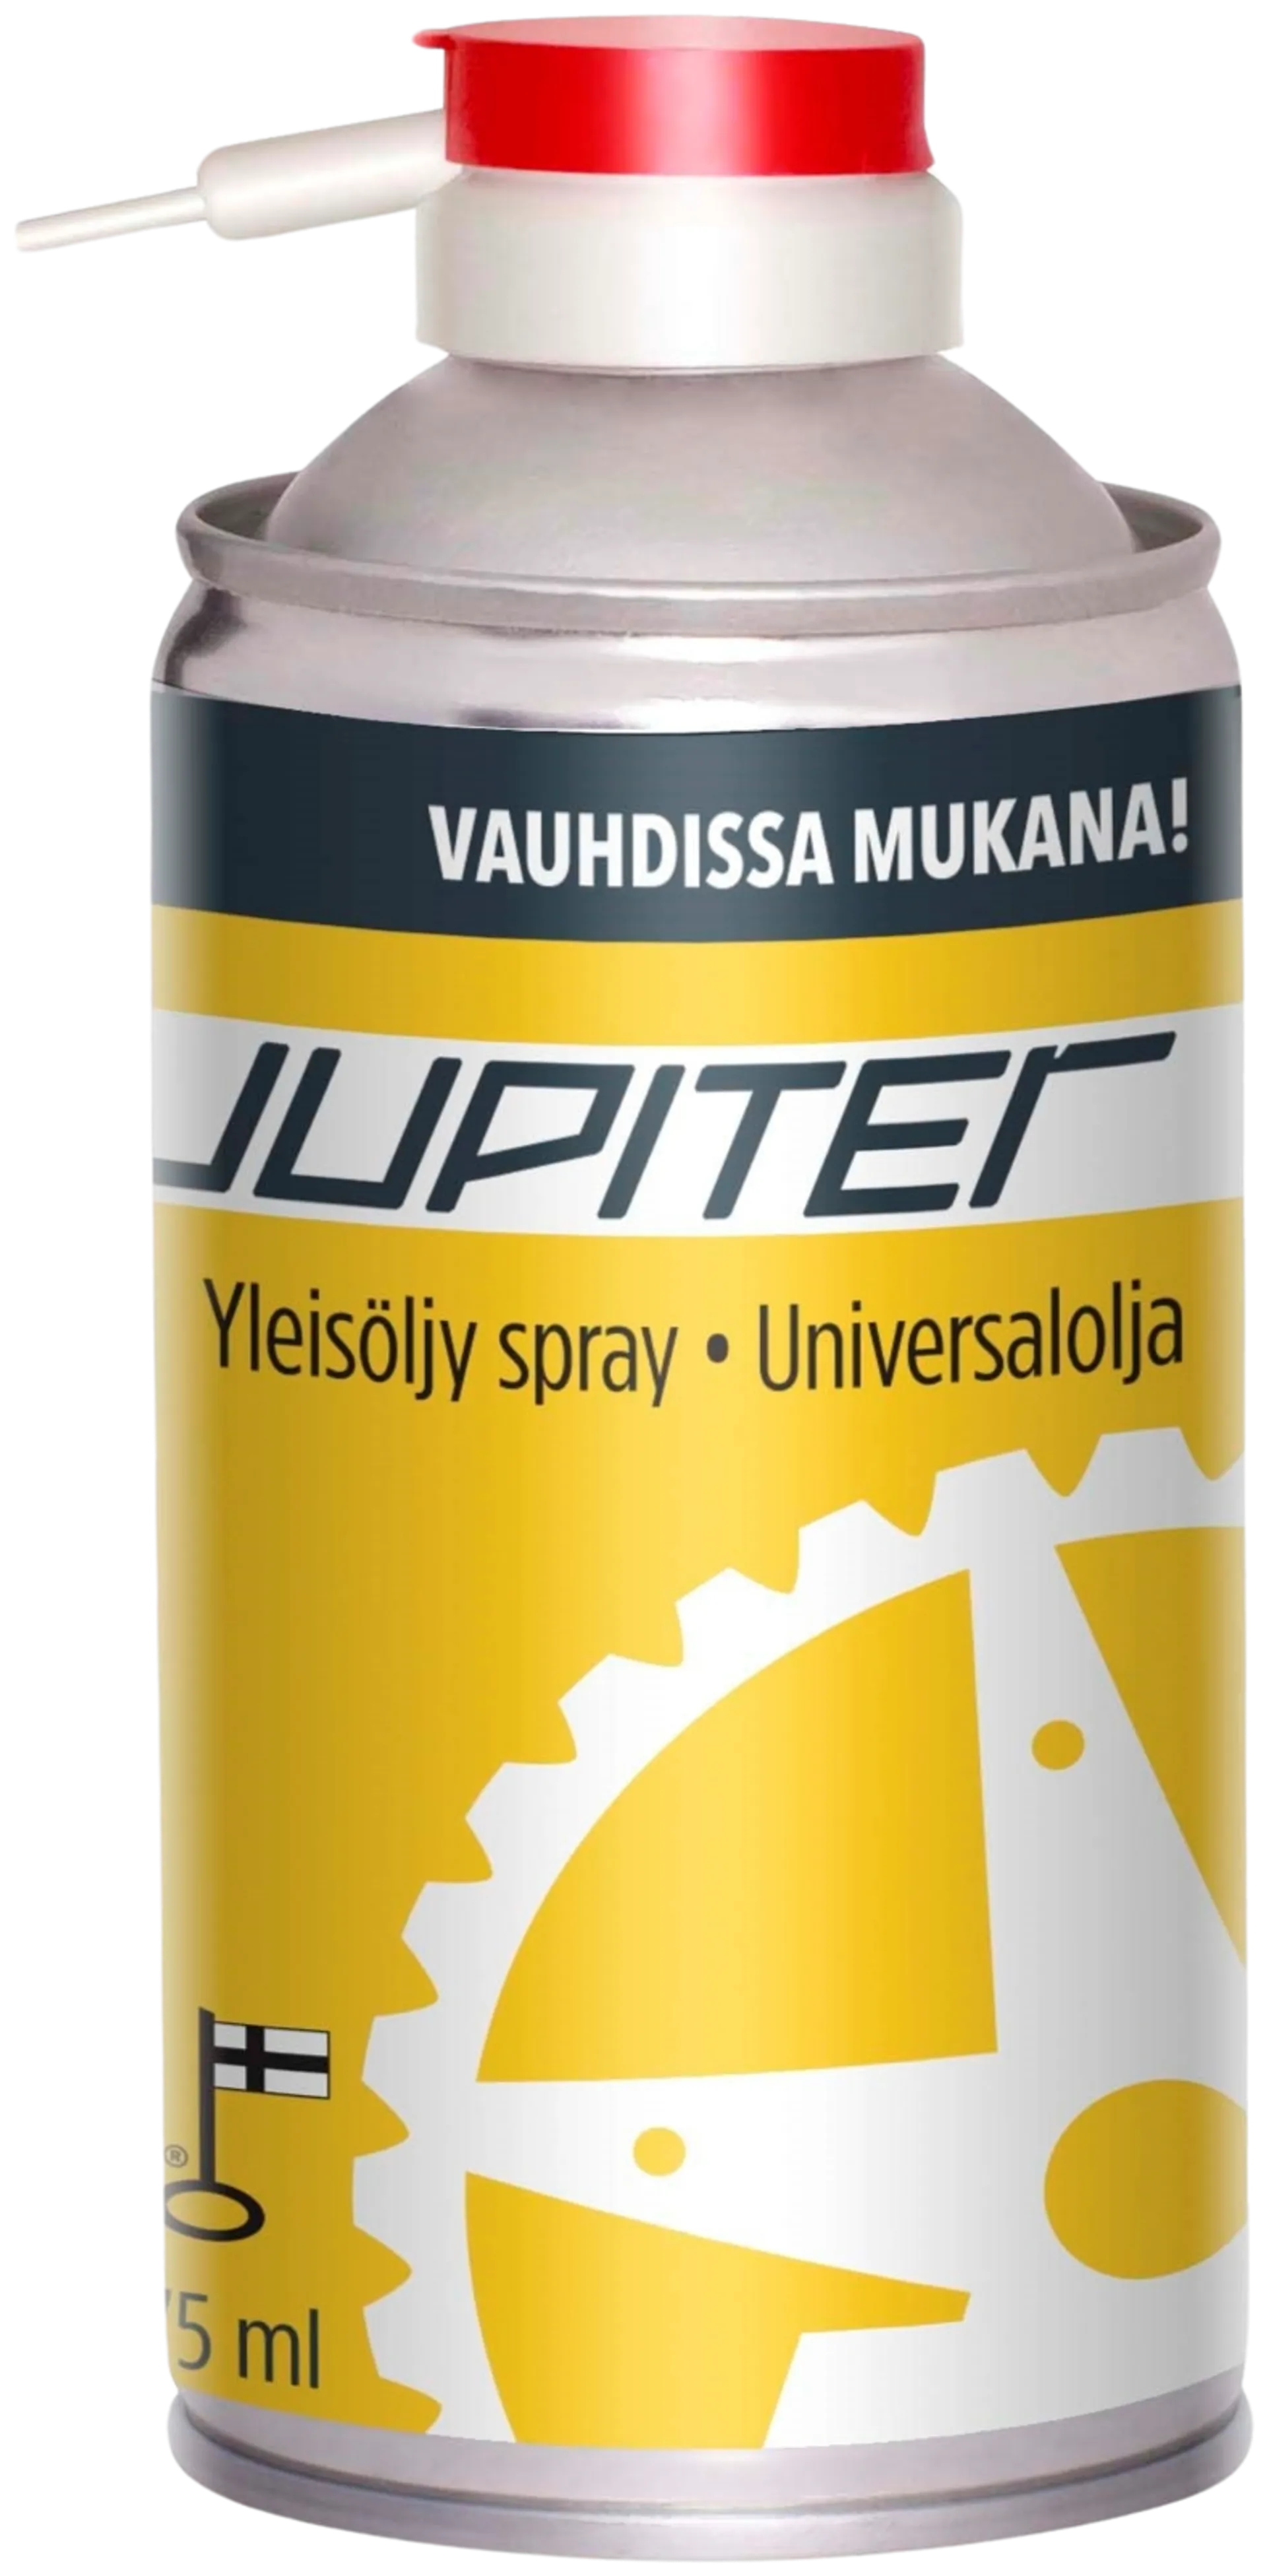 Jupiter Yleisöljy spray 75ml